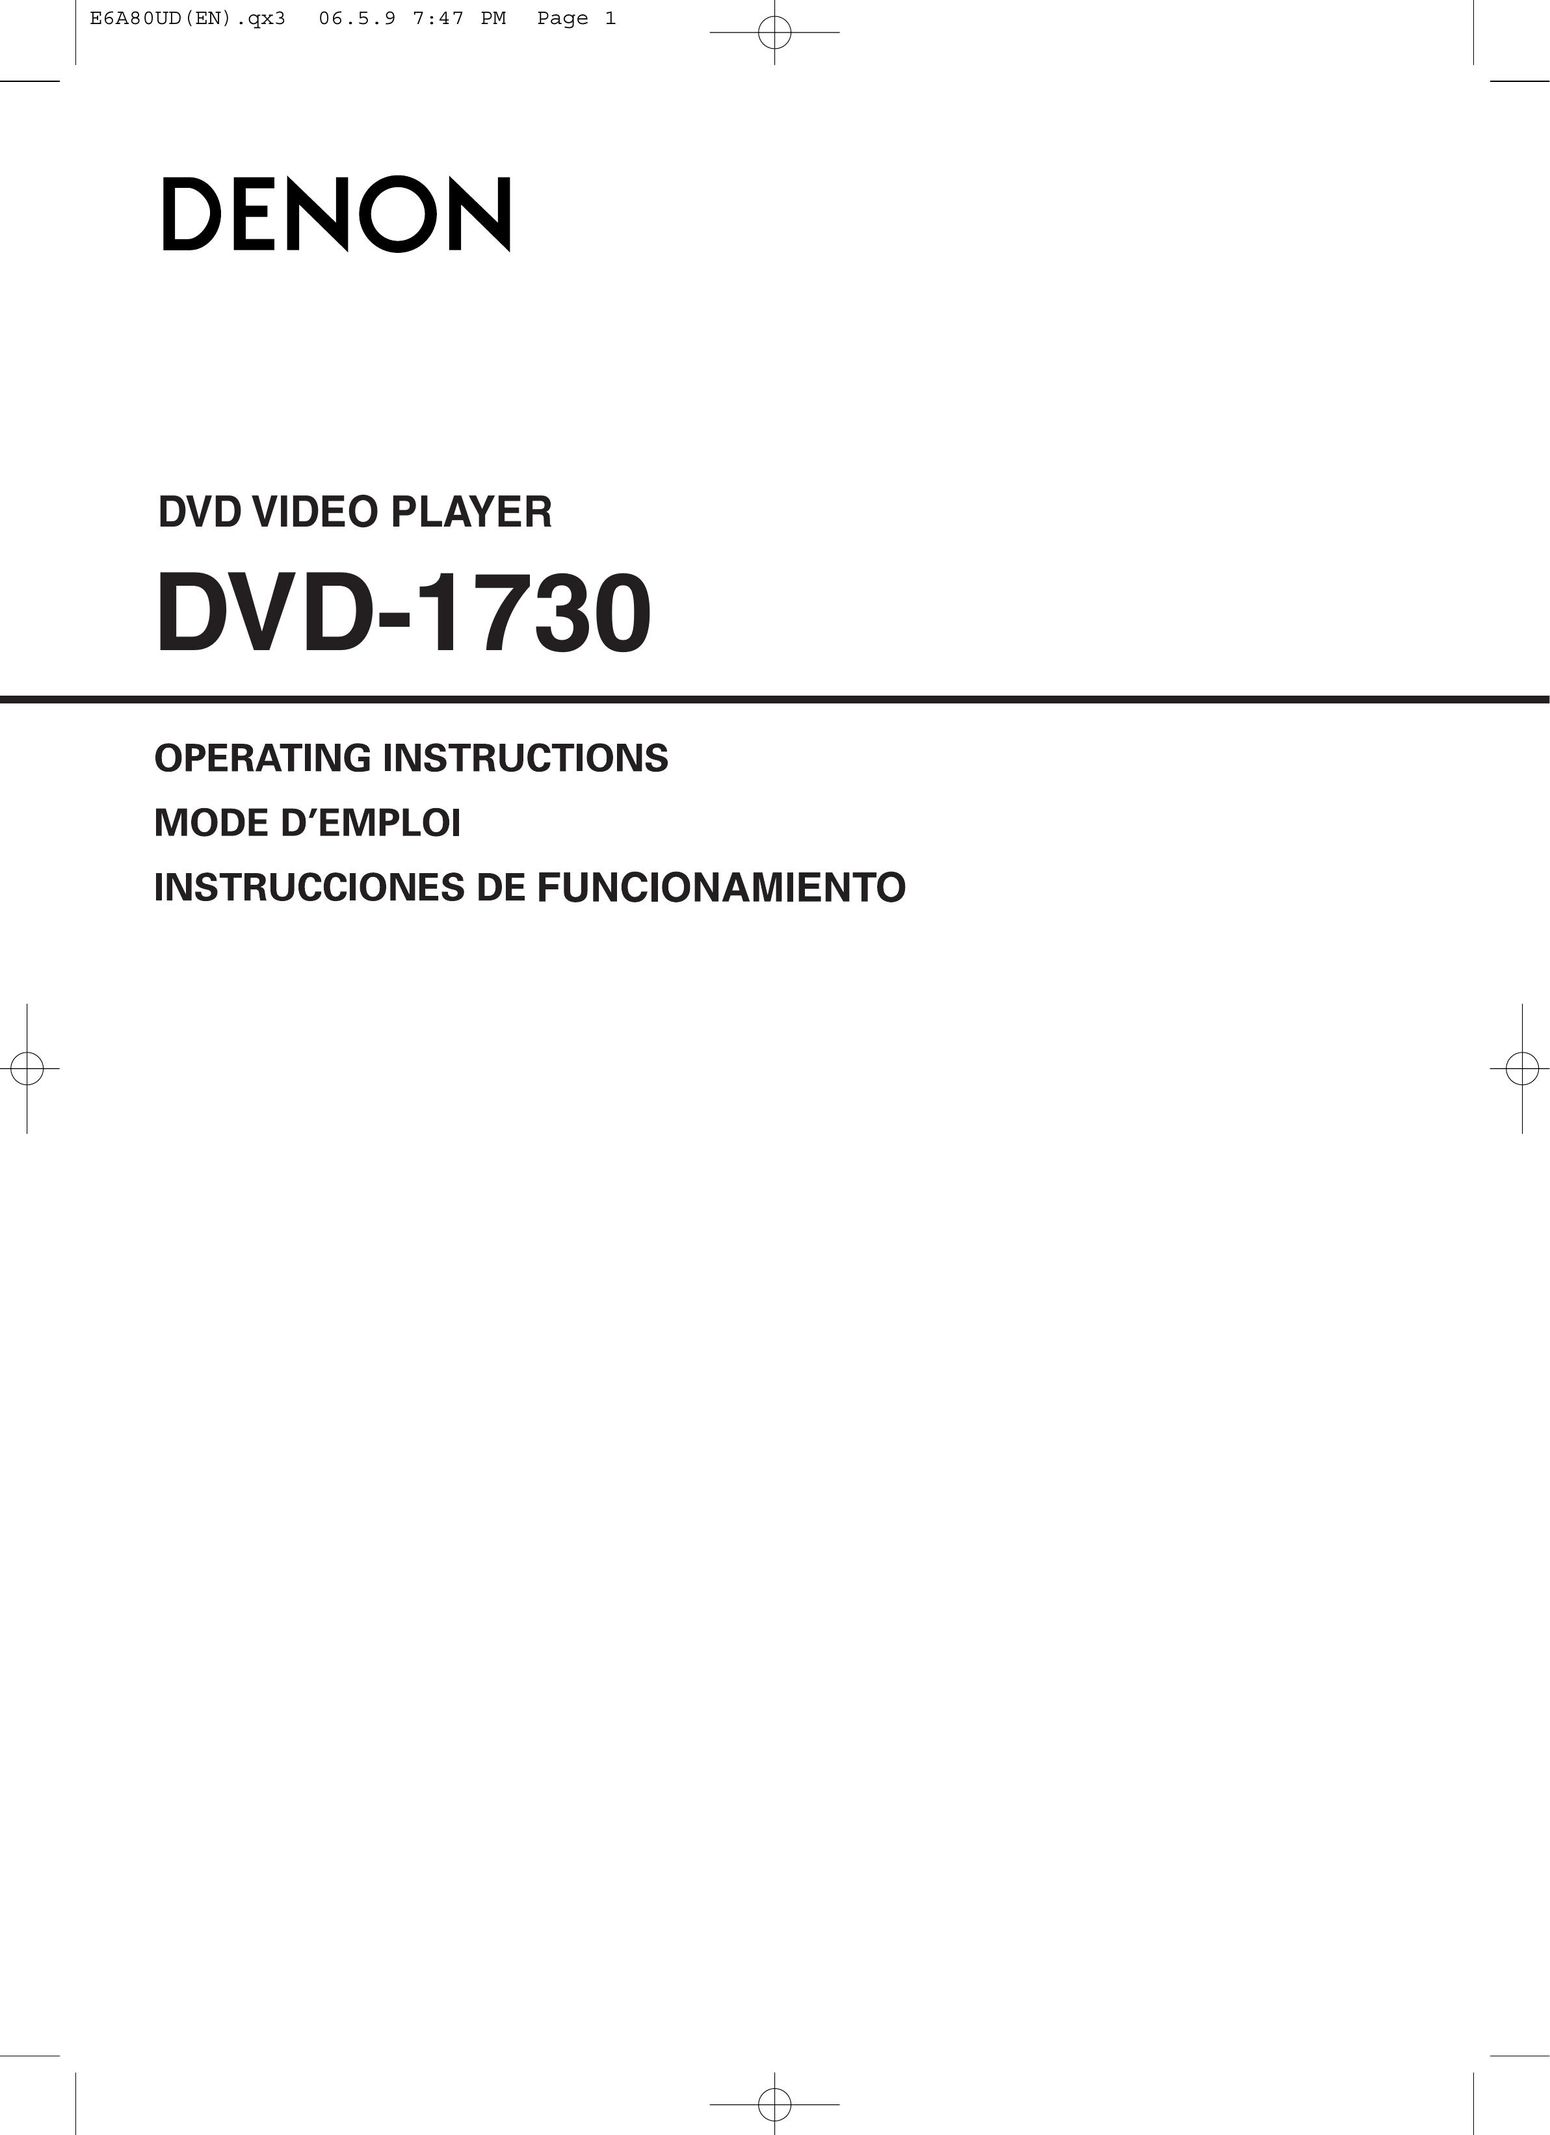 Denon DVD-1730 DVD Player User Manual